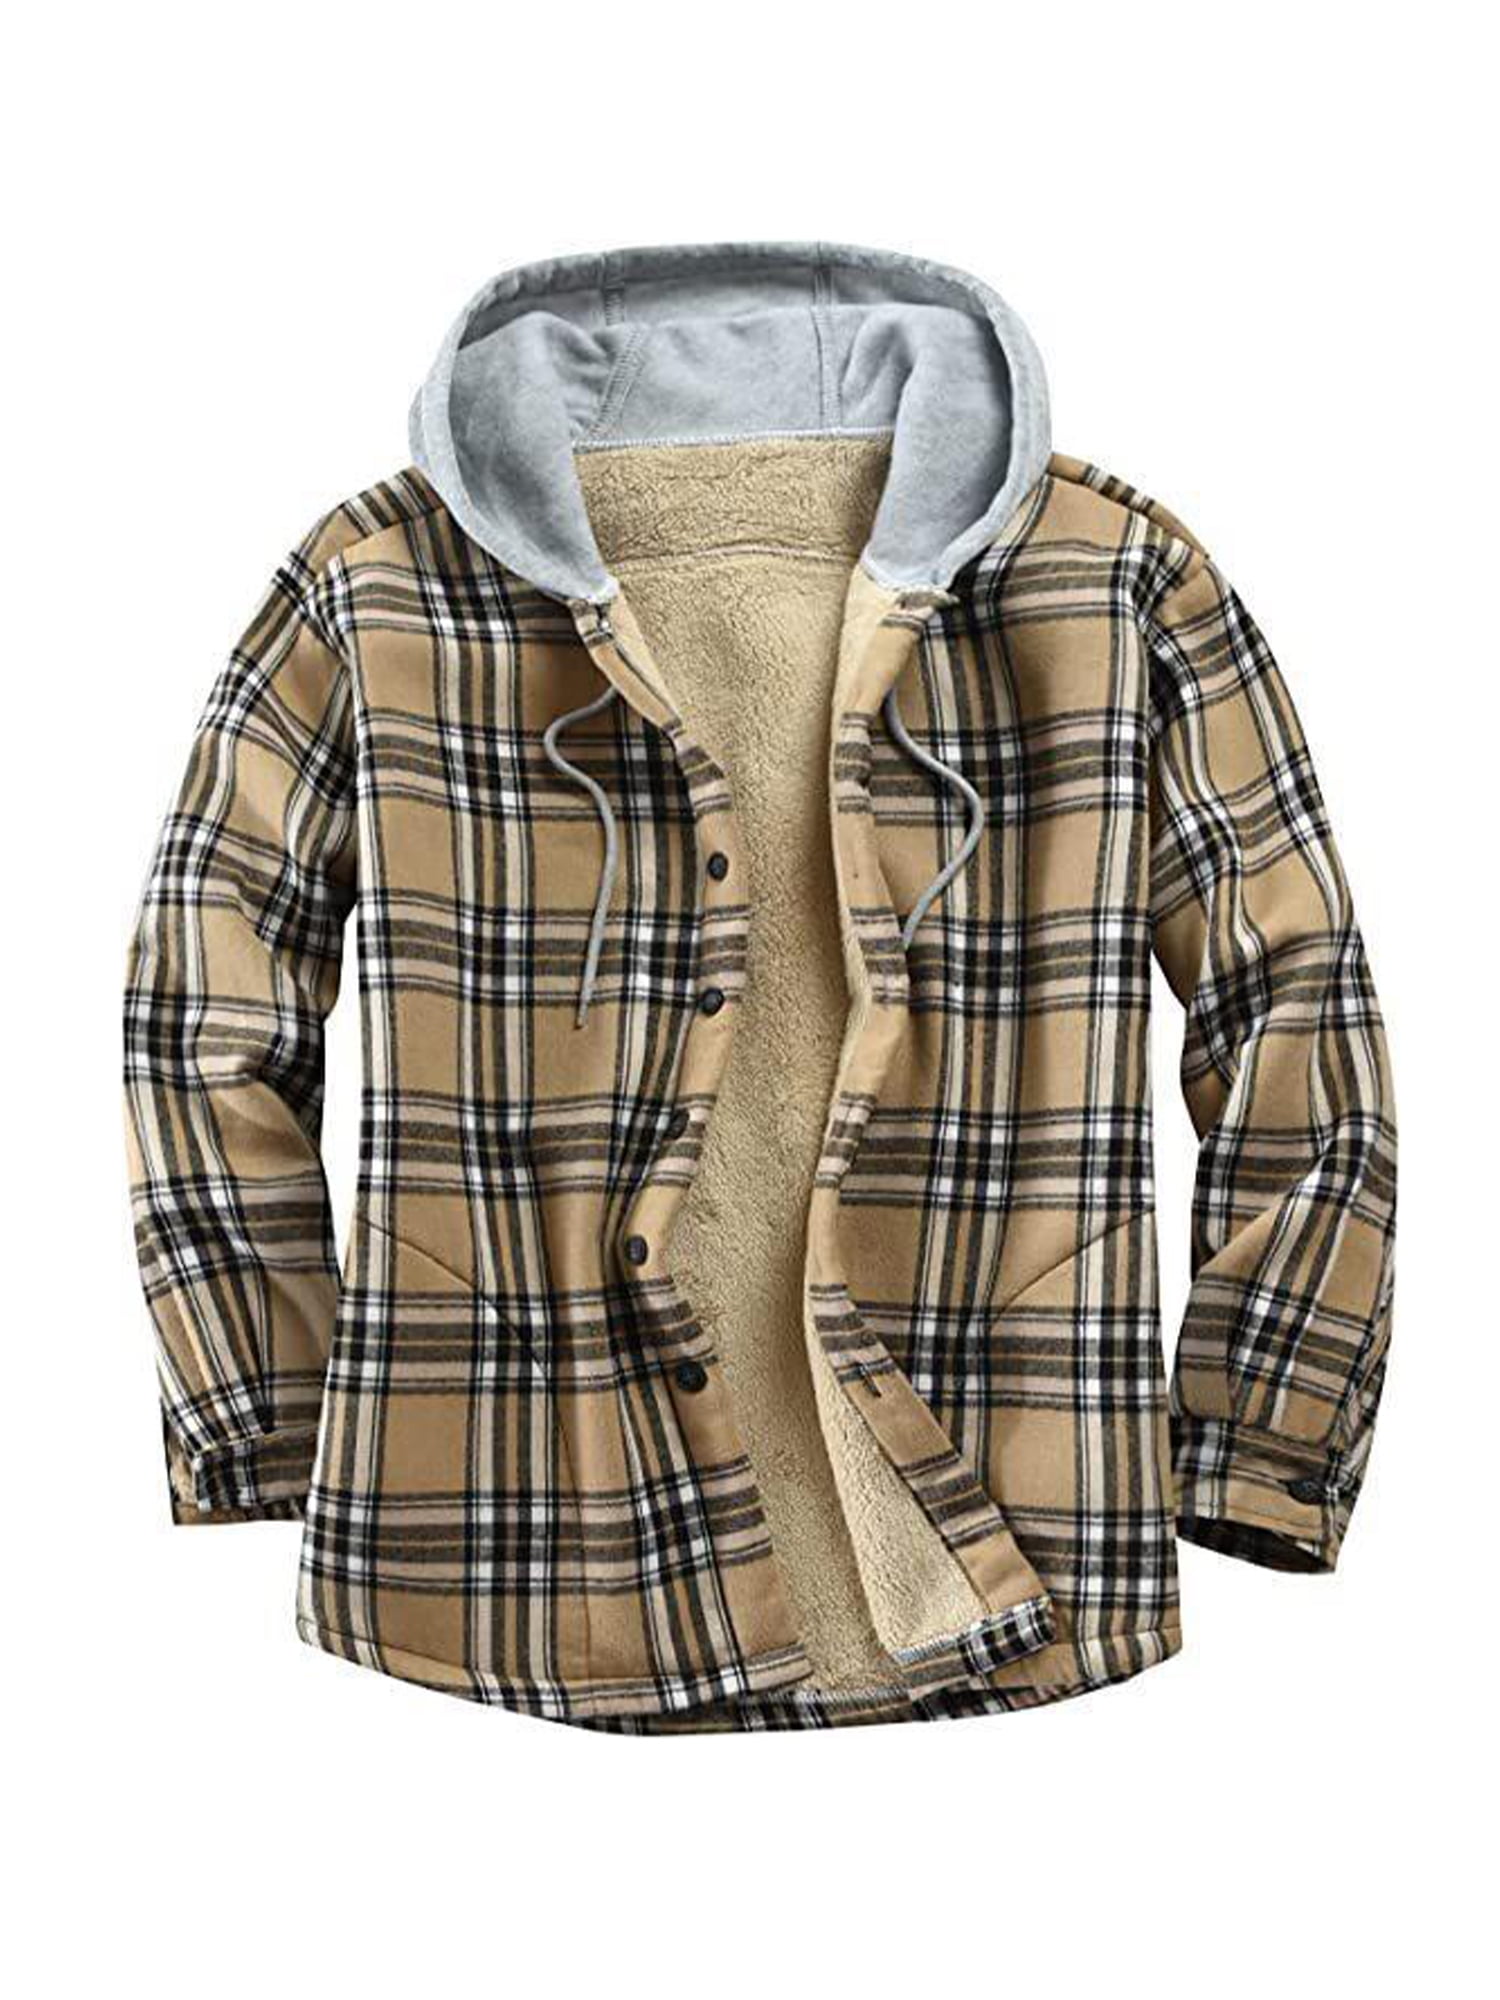 Capreze Plaid Shirts for Men Long Sleeve Jacket Hooded Outwear Button ...